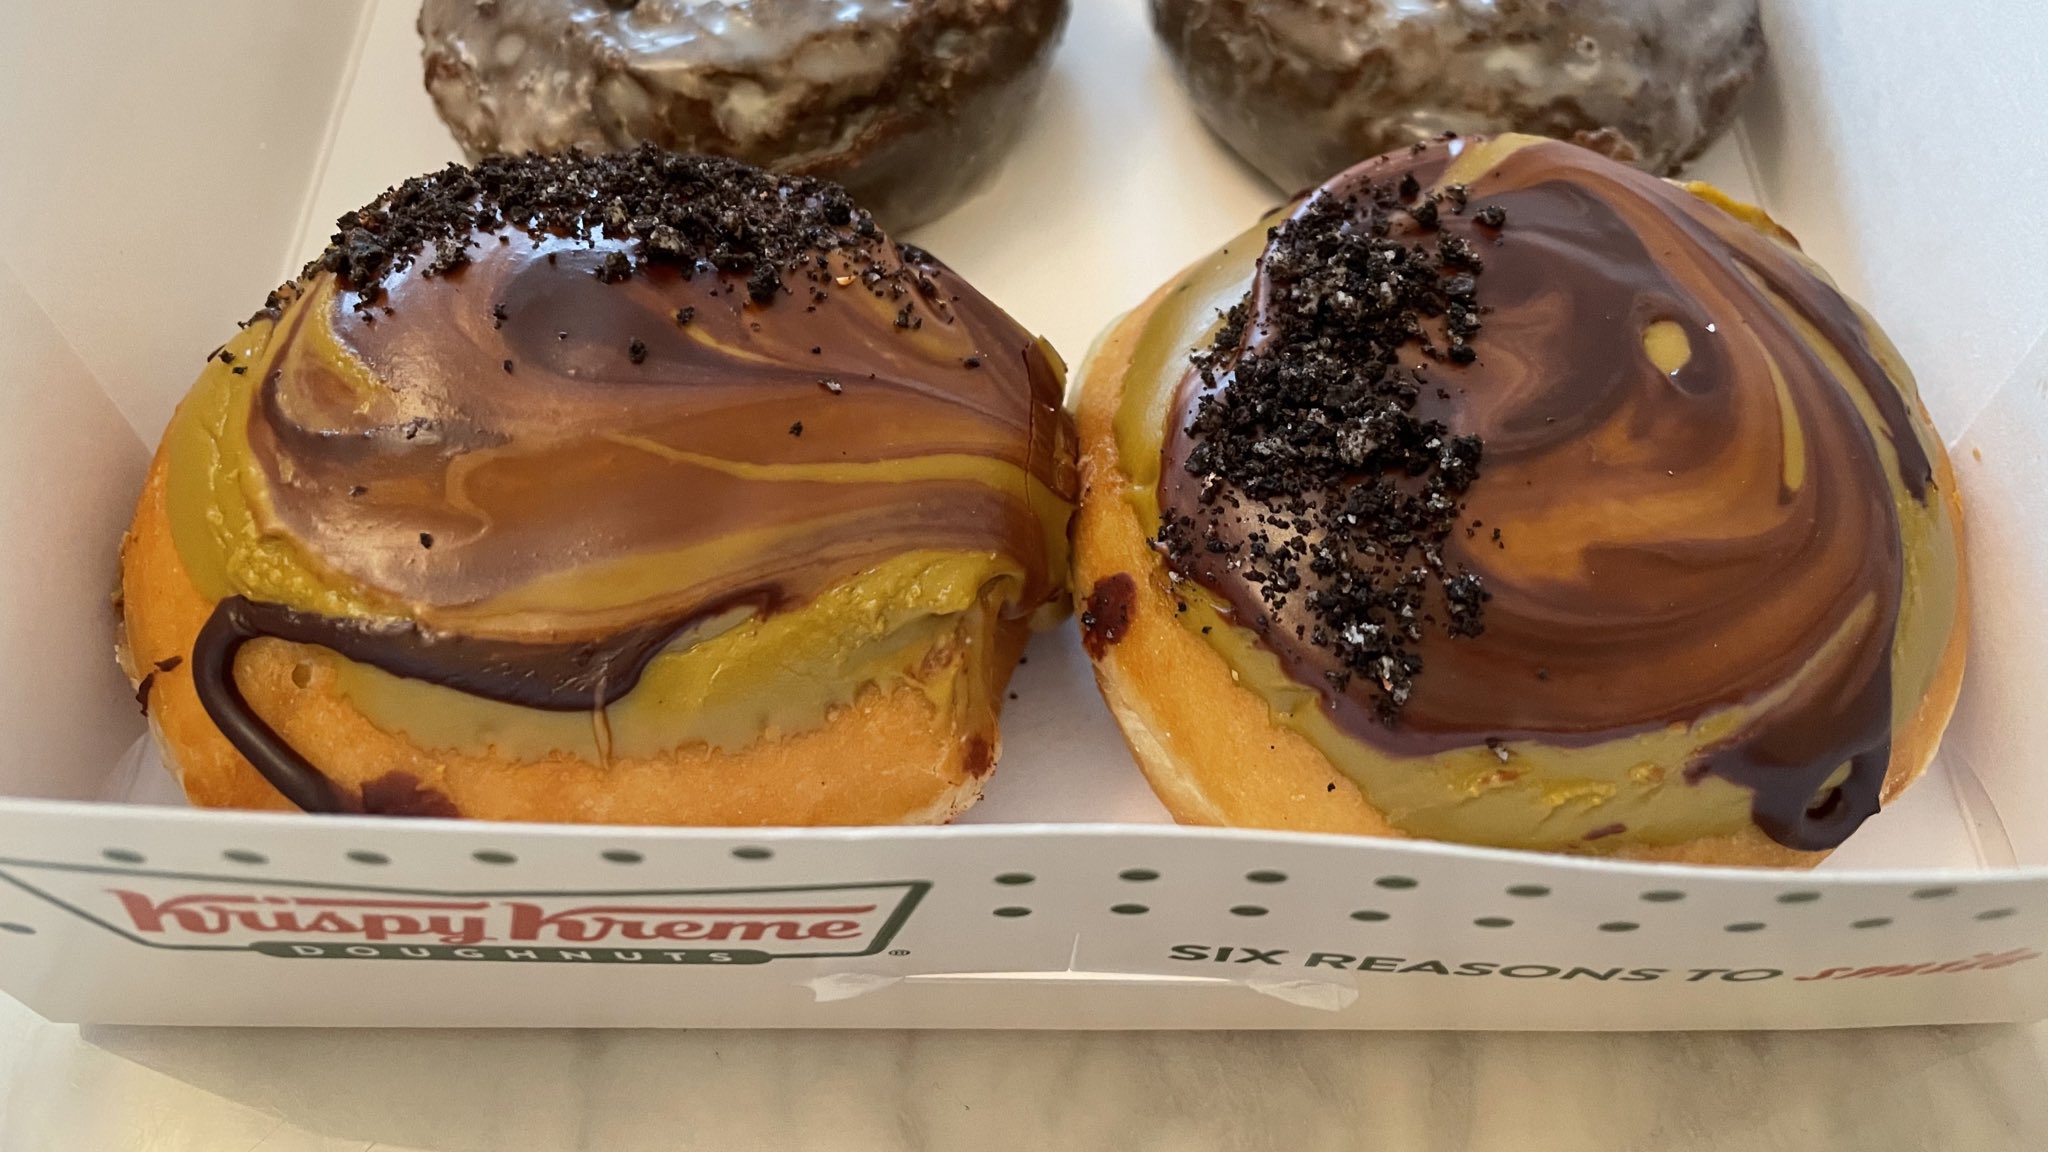 on X / of donuts Kreme Cabel https://t.co/tSDidSI7du\